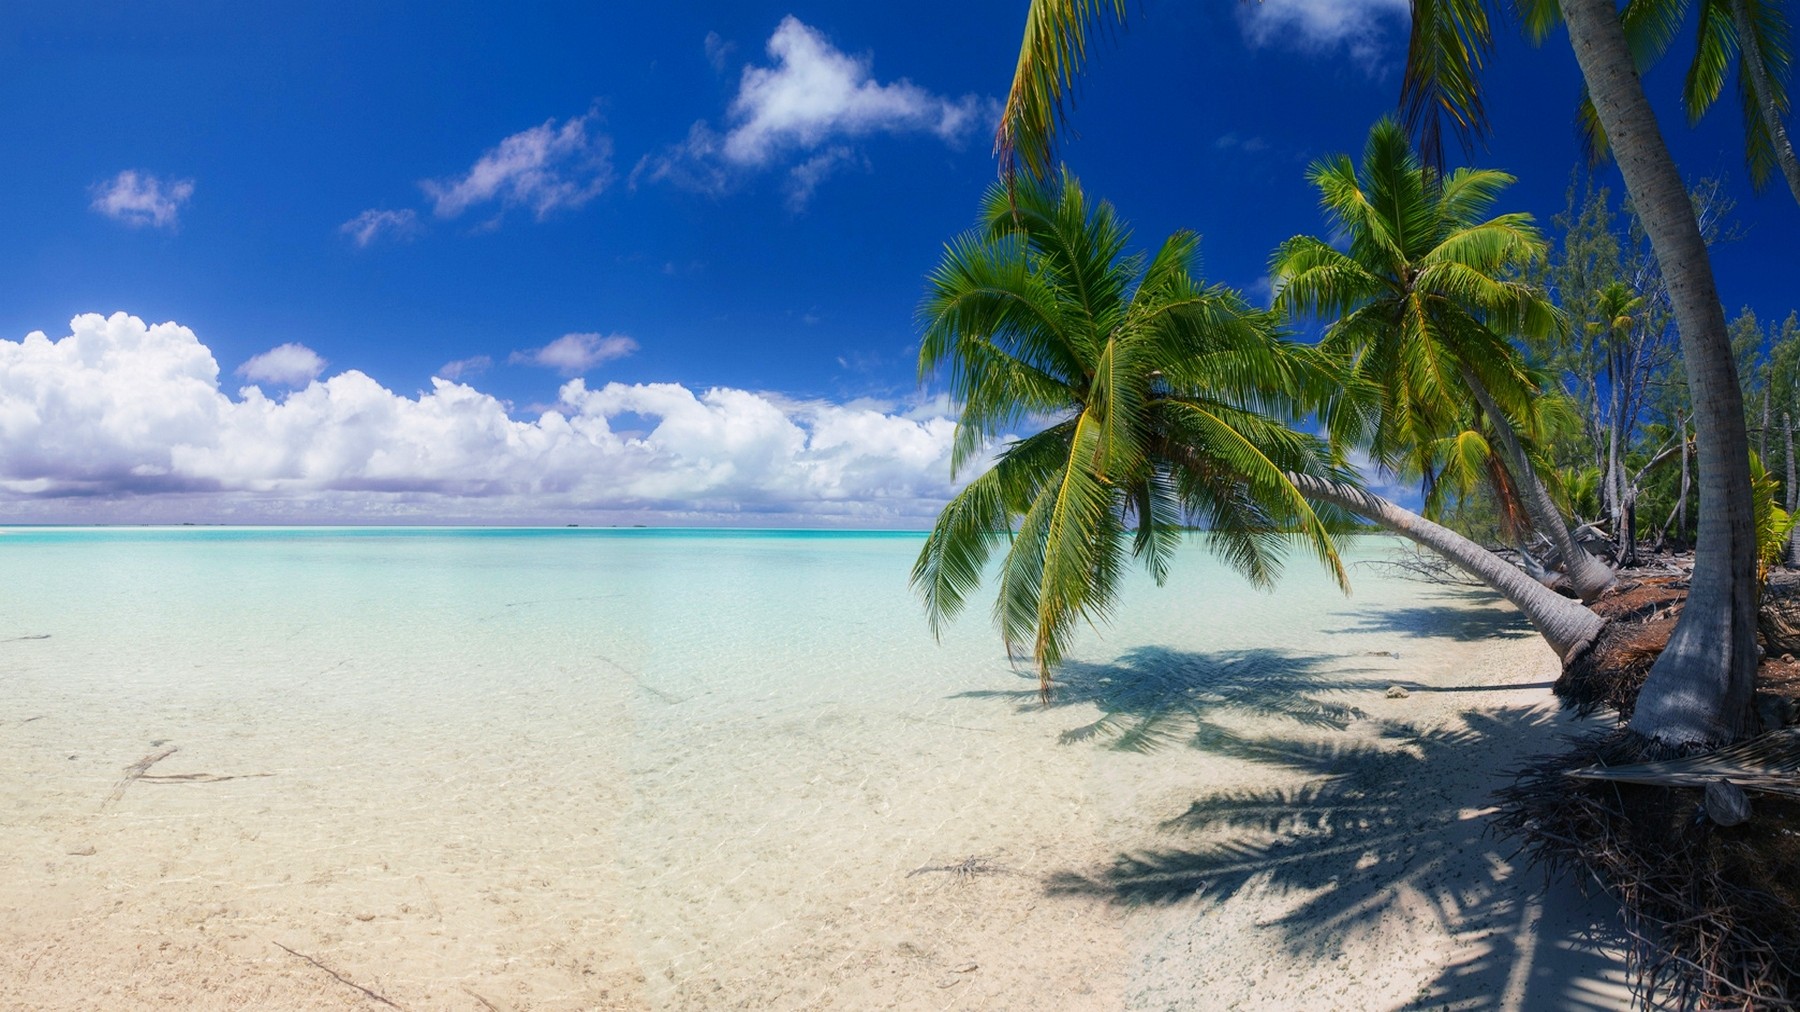 General 1800x1012 nature beach white sand island palm trees sea clouds tropical summer